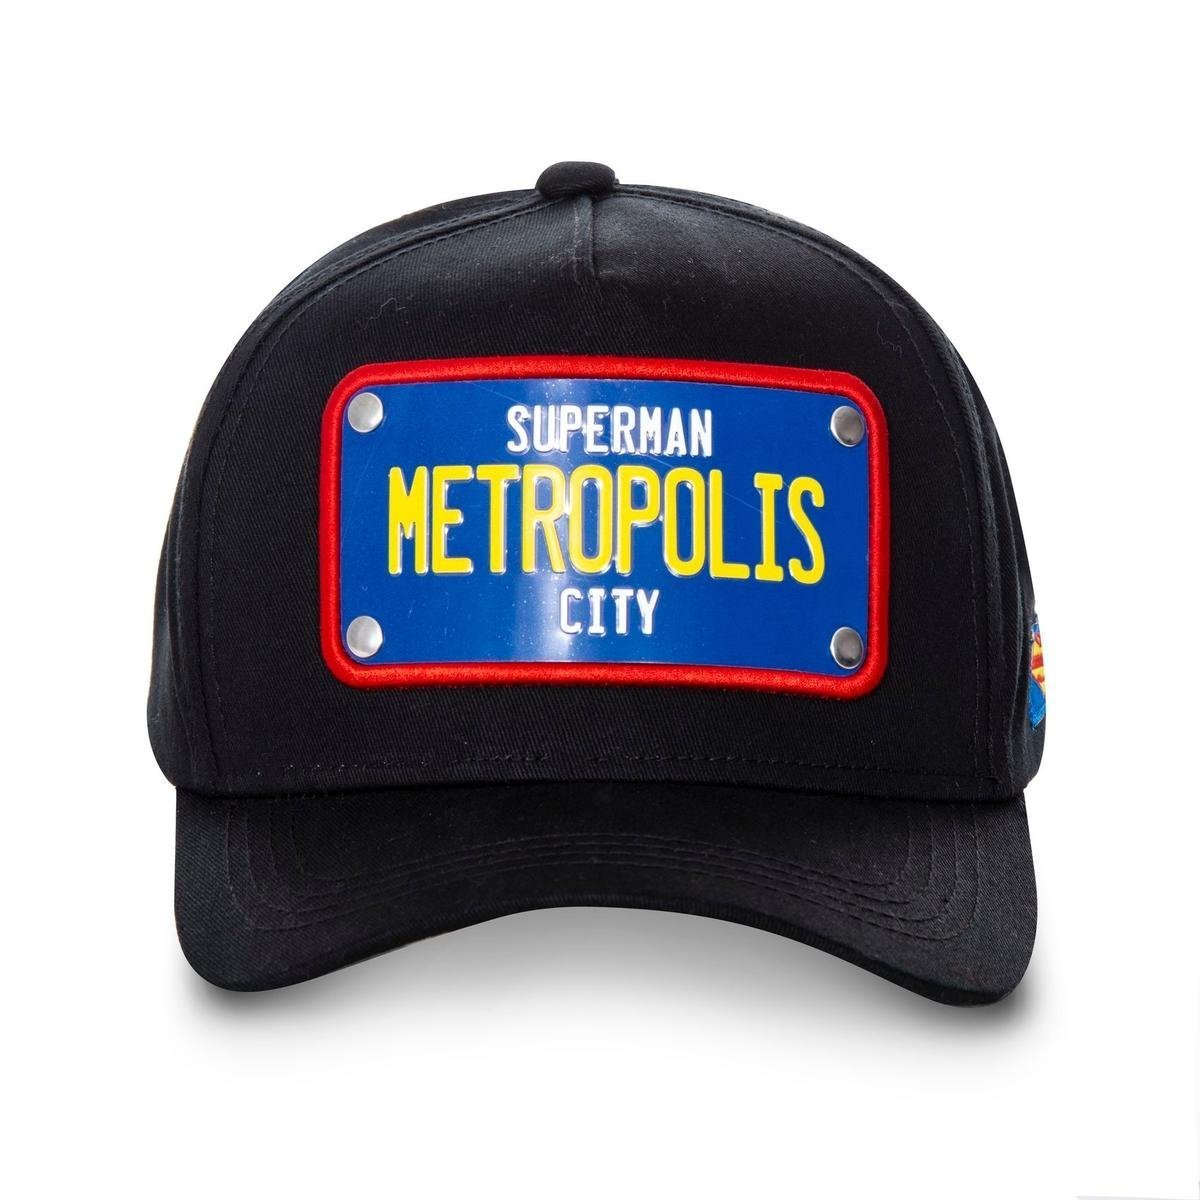 SUPERMAN METROPOLIS CITY